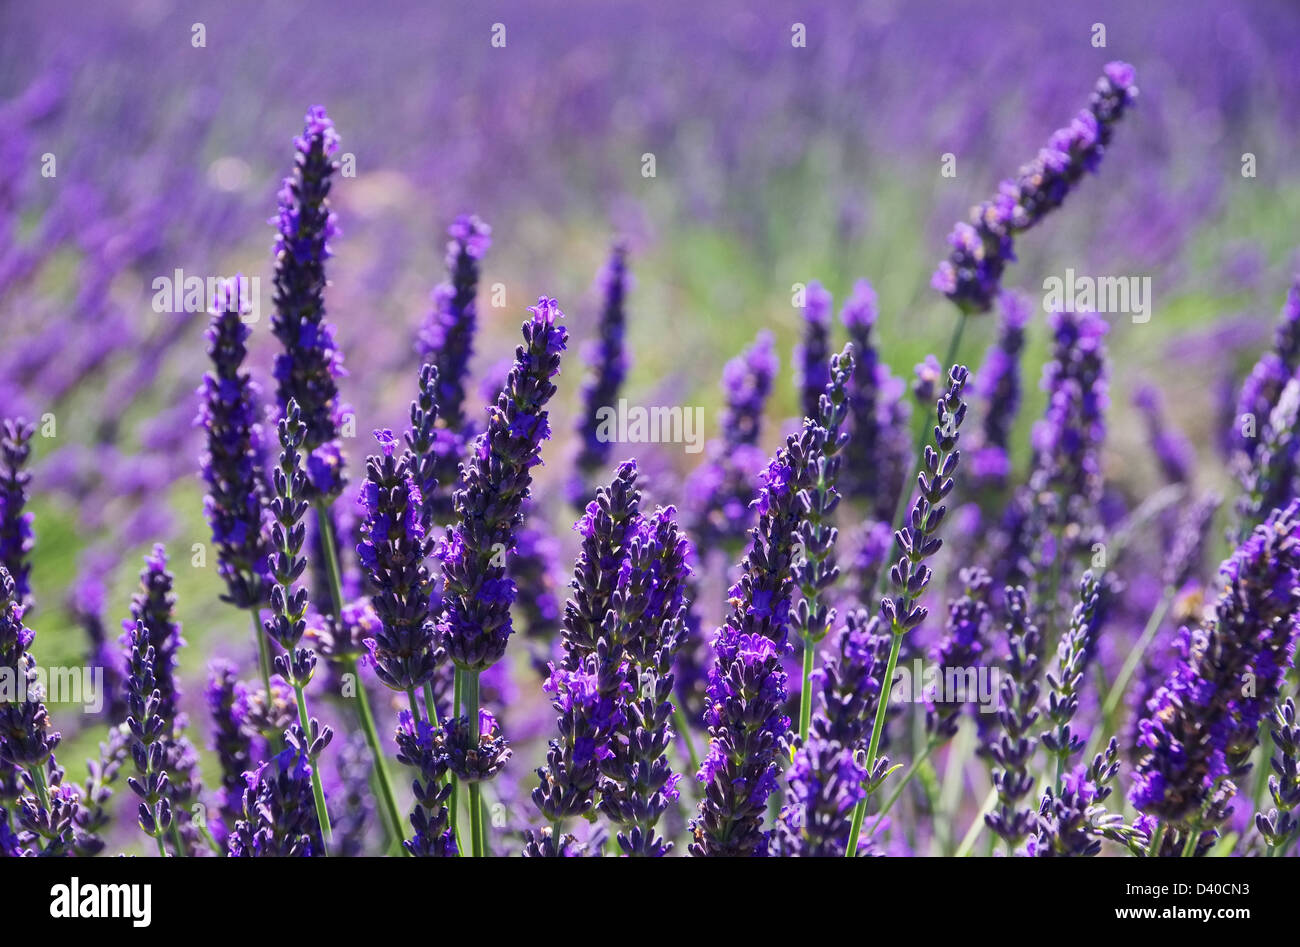 Lavendelfeld - lavender field 50 Stock Photo